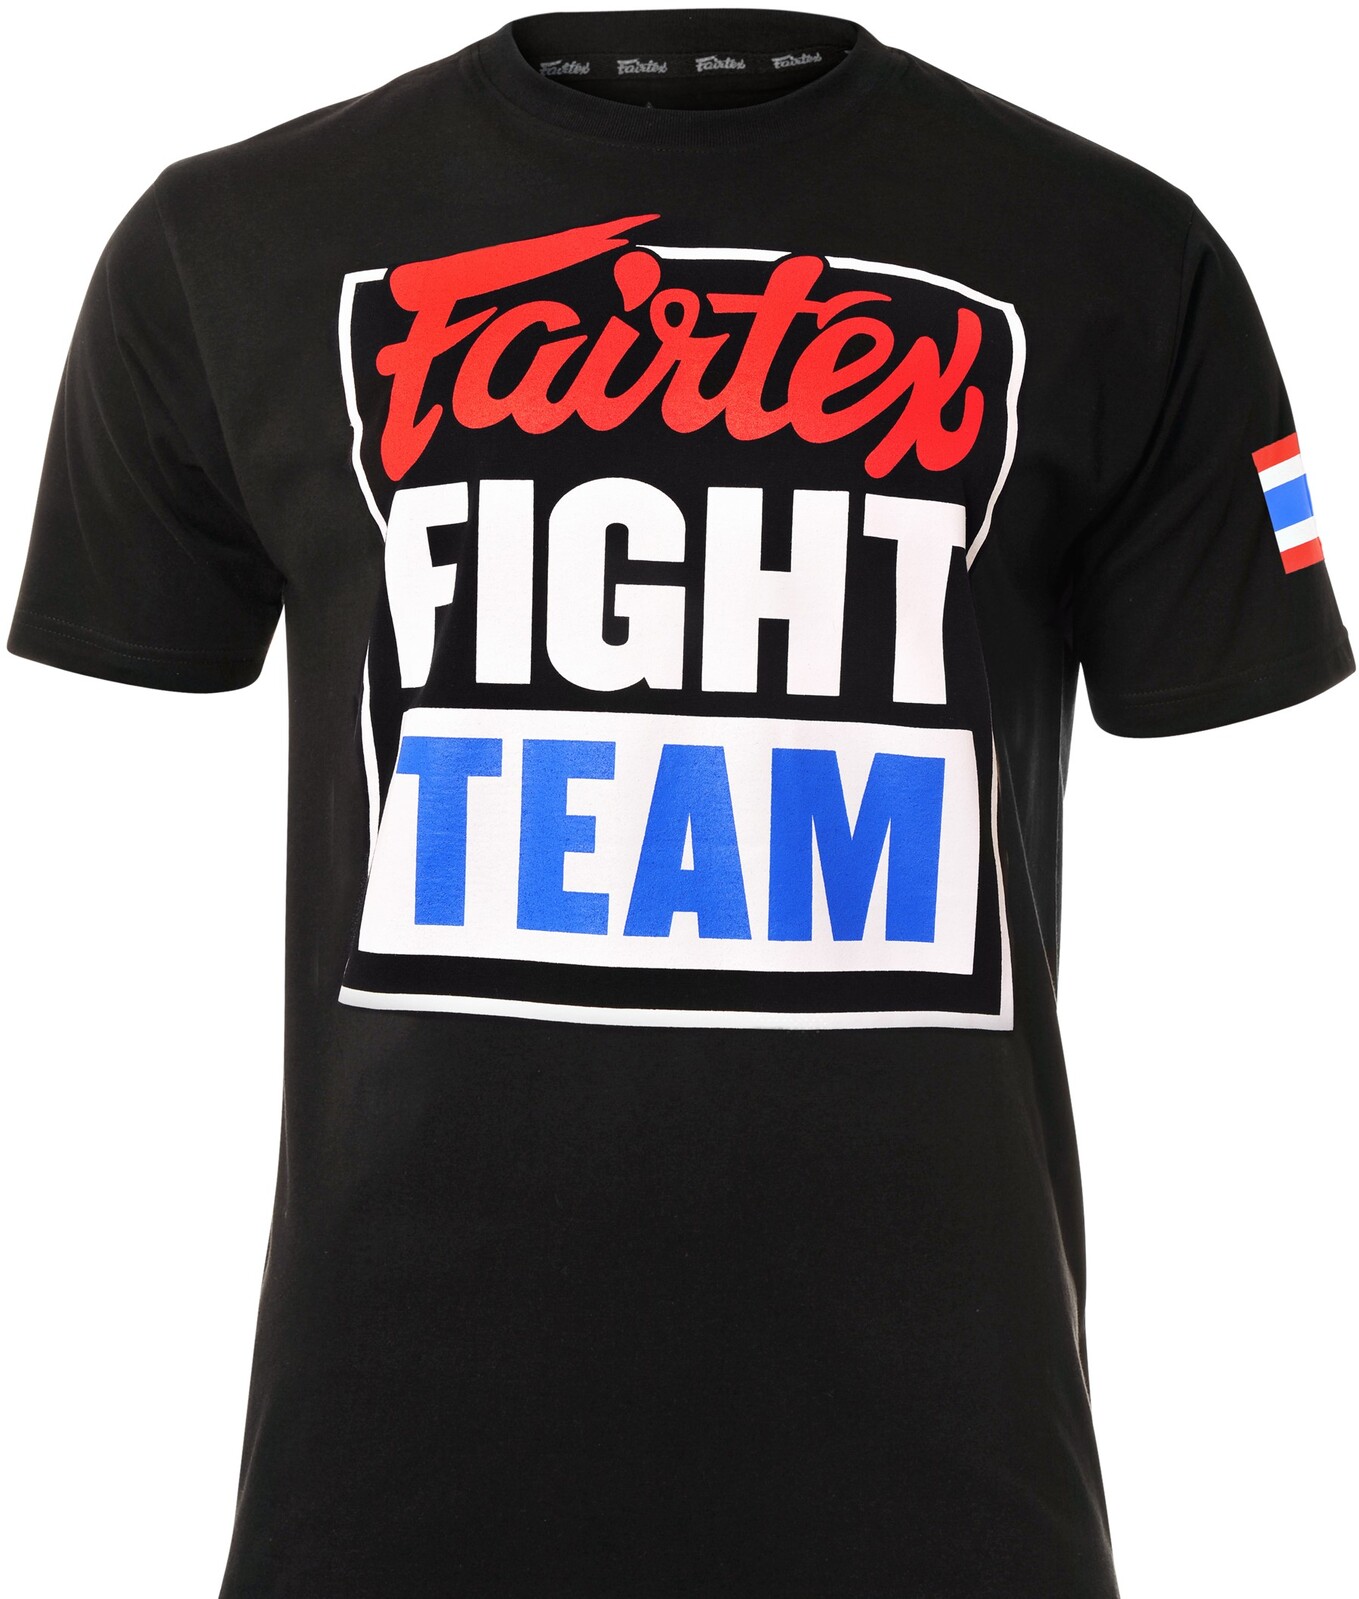 FAIRTEX - T Shirt - Fight Team - BLACK/BLUE (TST51) - Medium